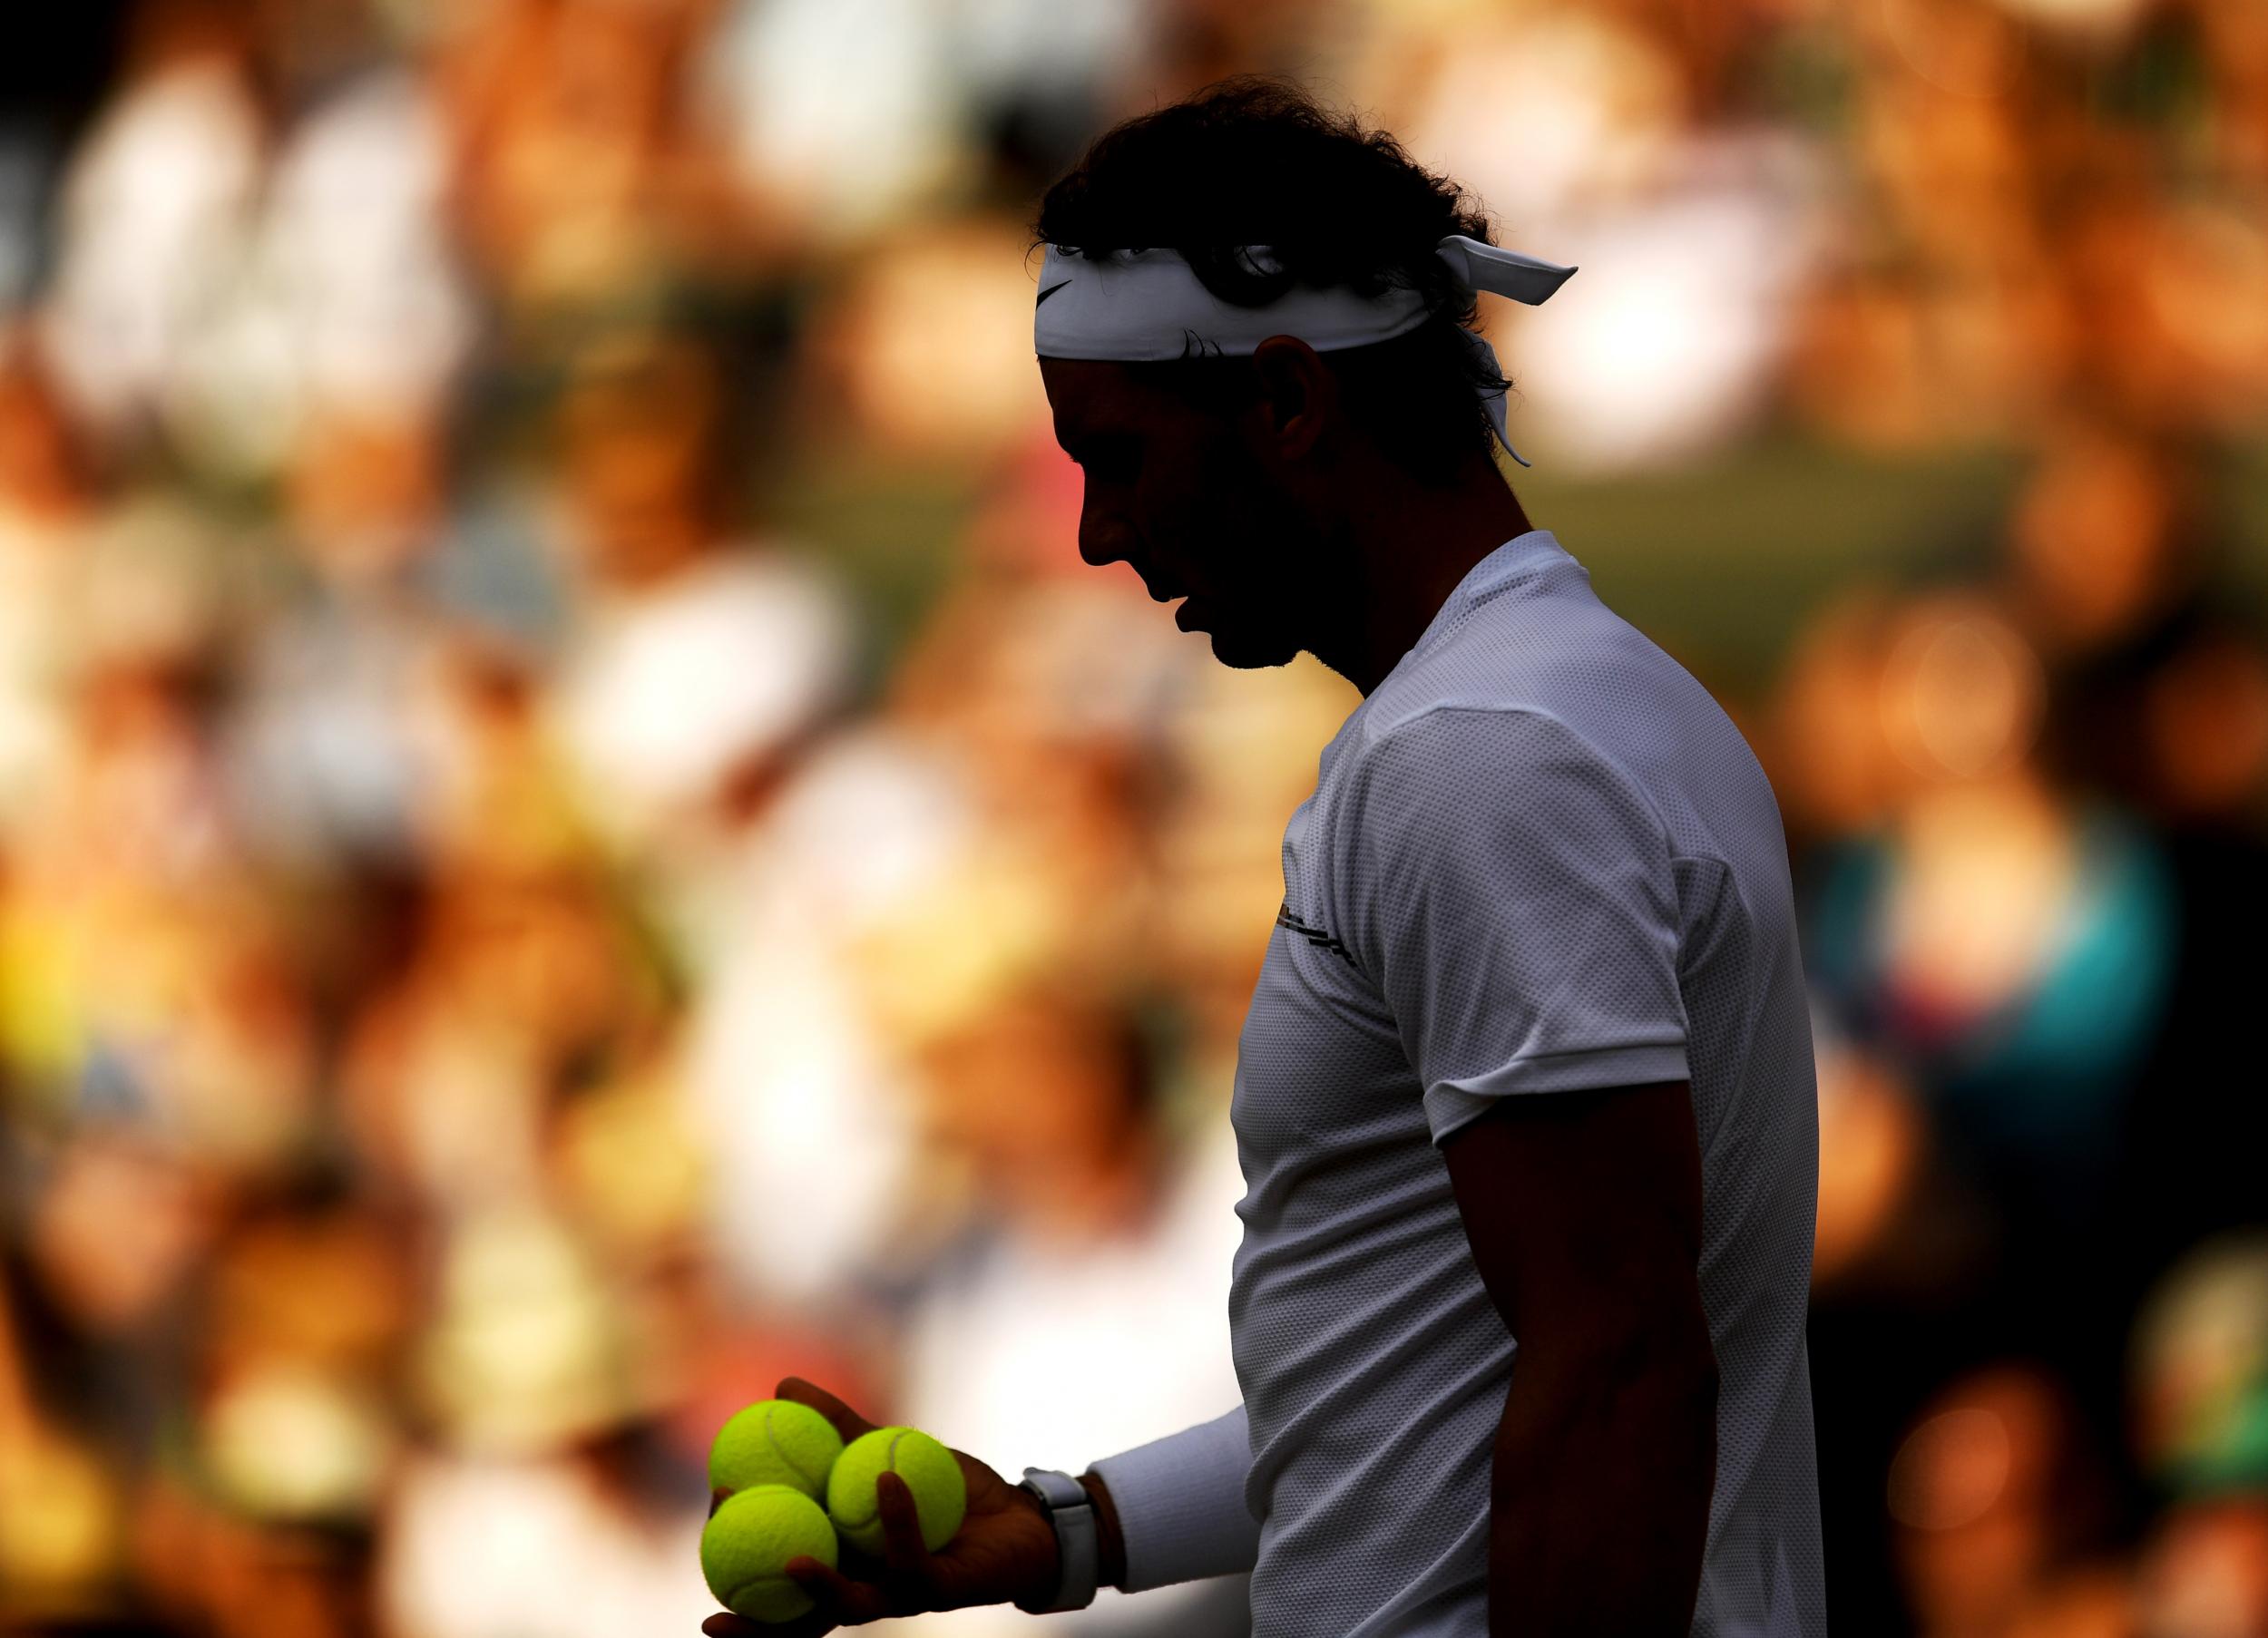 Nadal crashed out in five-sets